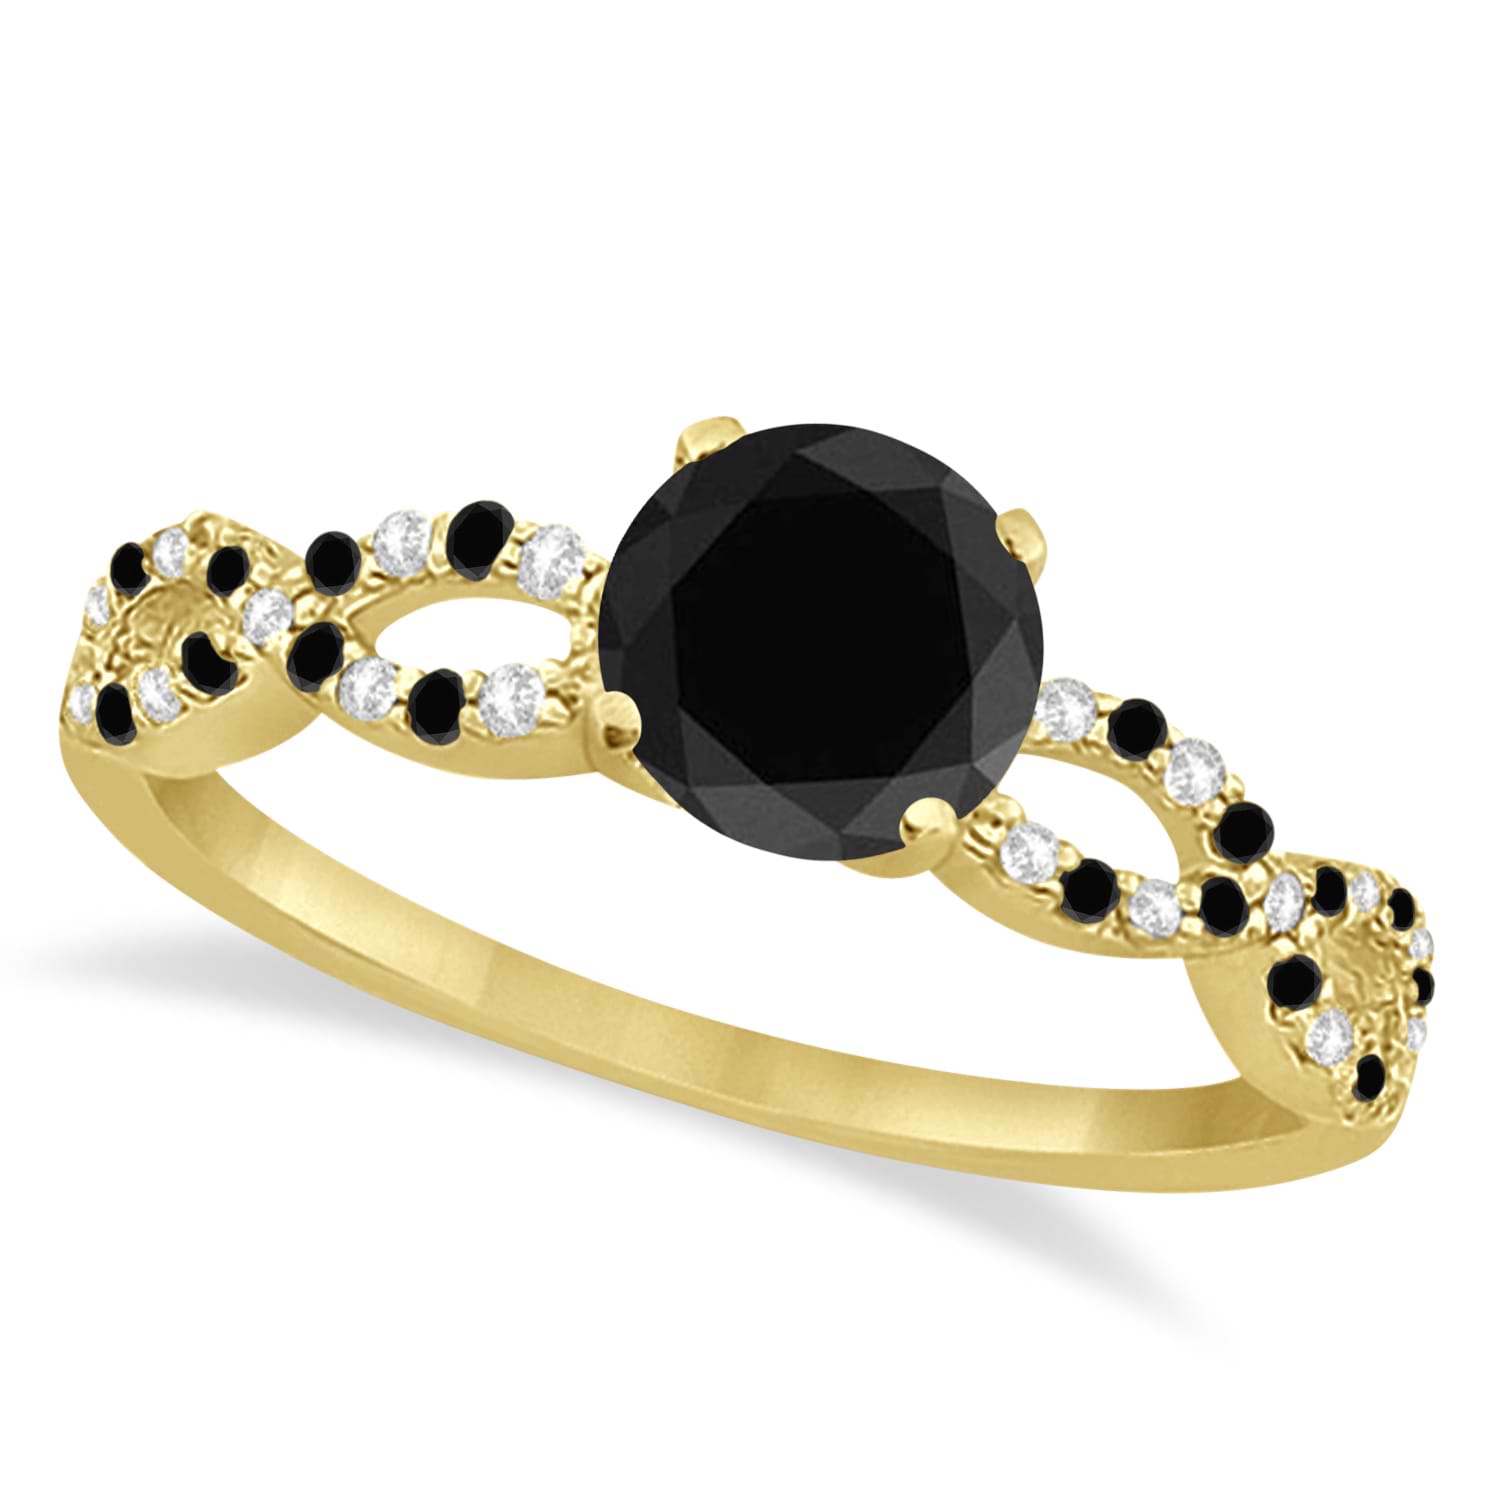 White & Black Diamond Infinity Engagement Ring 14k Yellow Gold 1.65ct